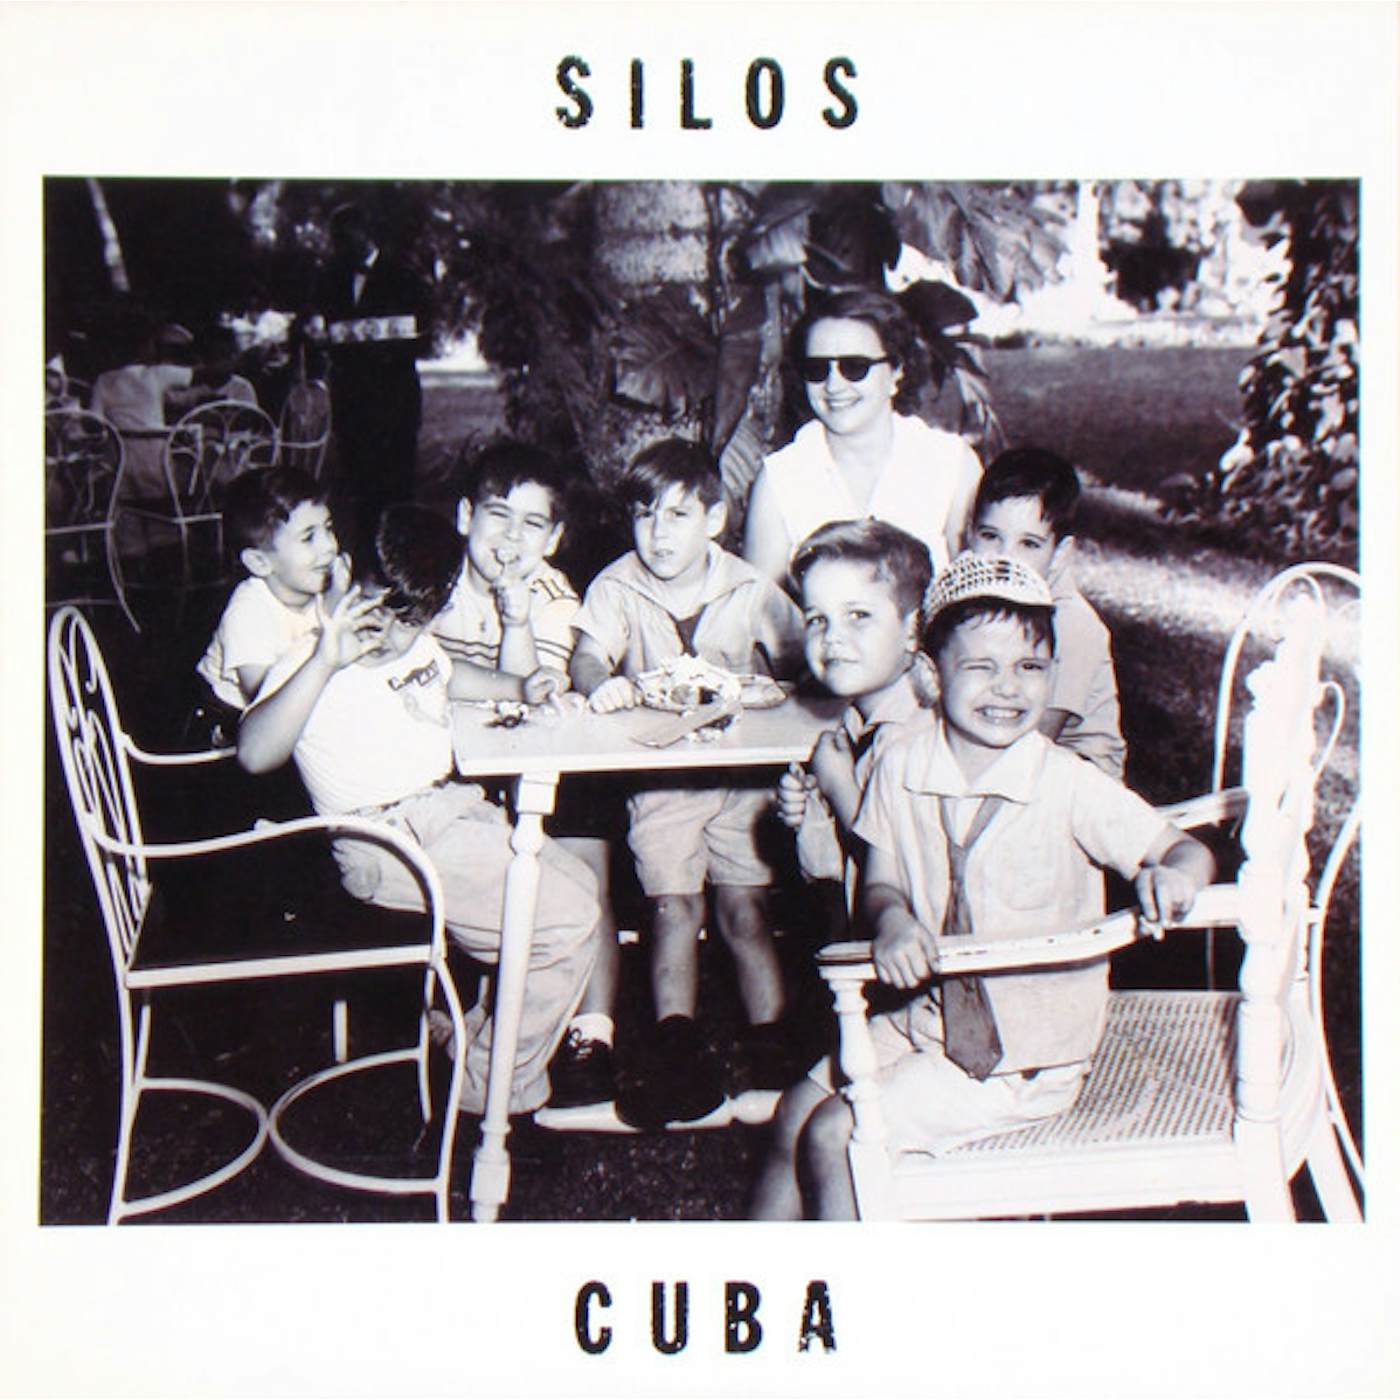 Silos Cuba Vinyl Record